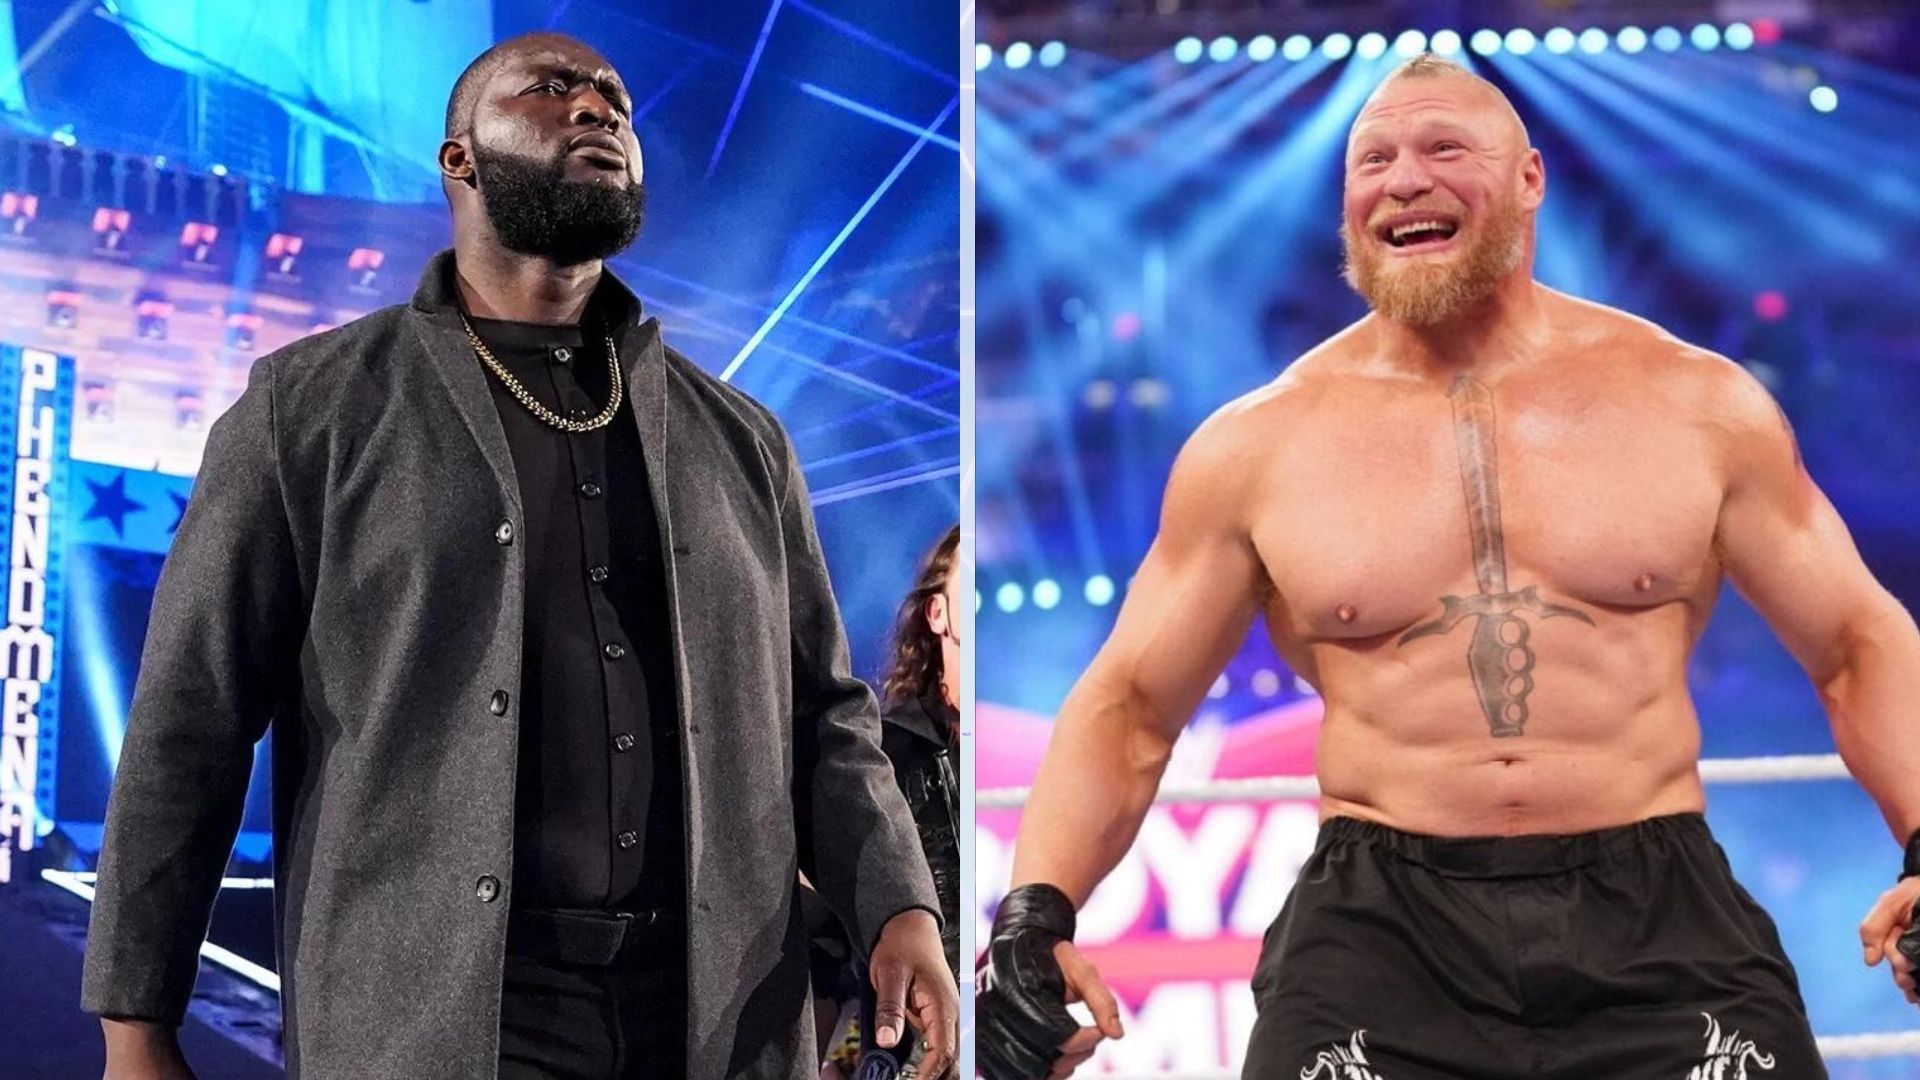 Omos vs. Brock Lesnar is confirmed for WrestleMania 39 